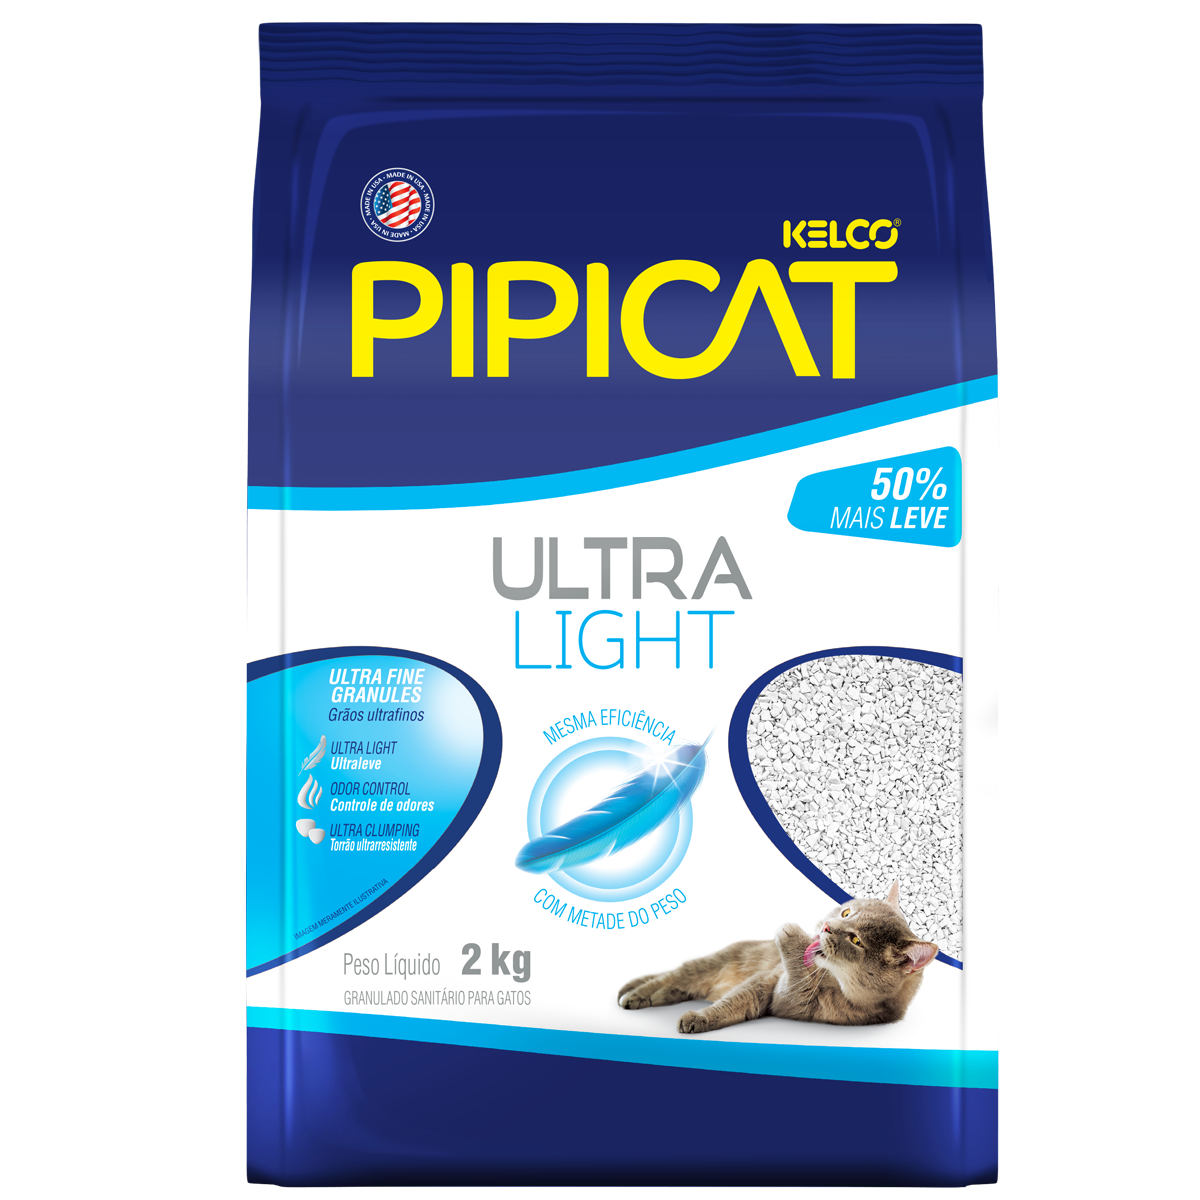 Pipicat Ultra Light 2kg - Kelco Pet Care